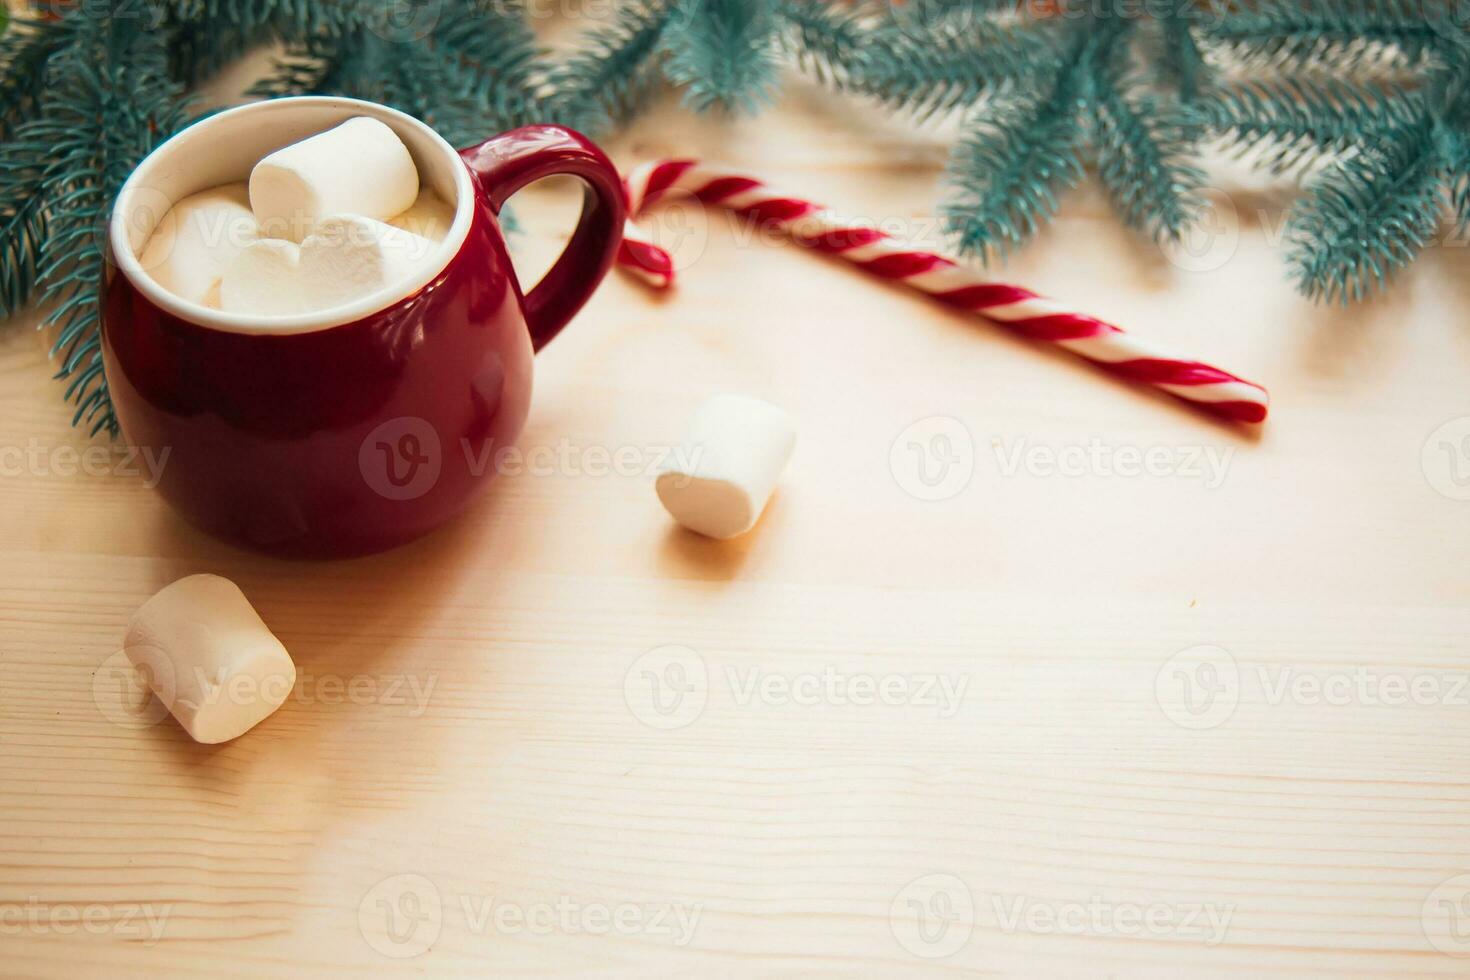 ed cups met heet chocola of cacao en heemst met snoep stok. Kerstmis concept met Spar boom takken. detailopname, selectief focus foto